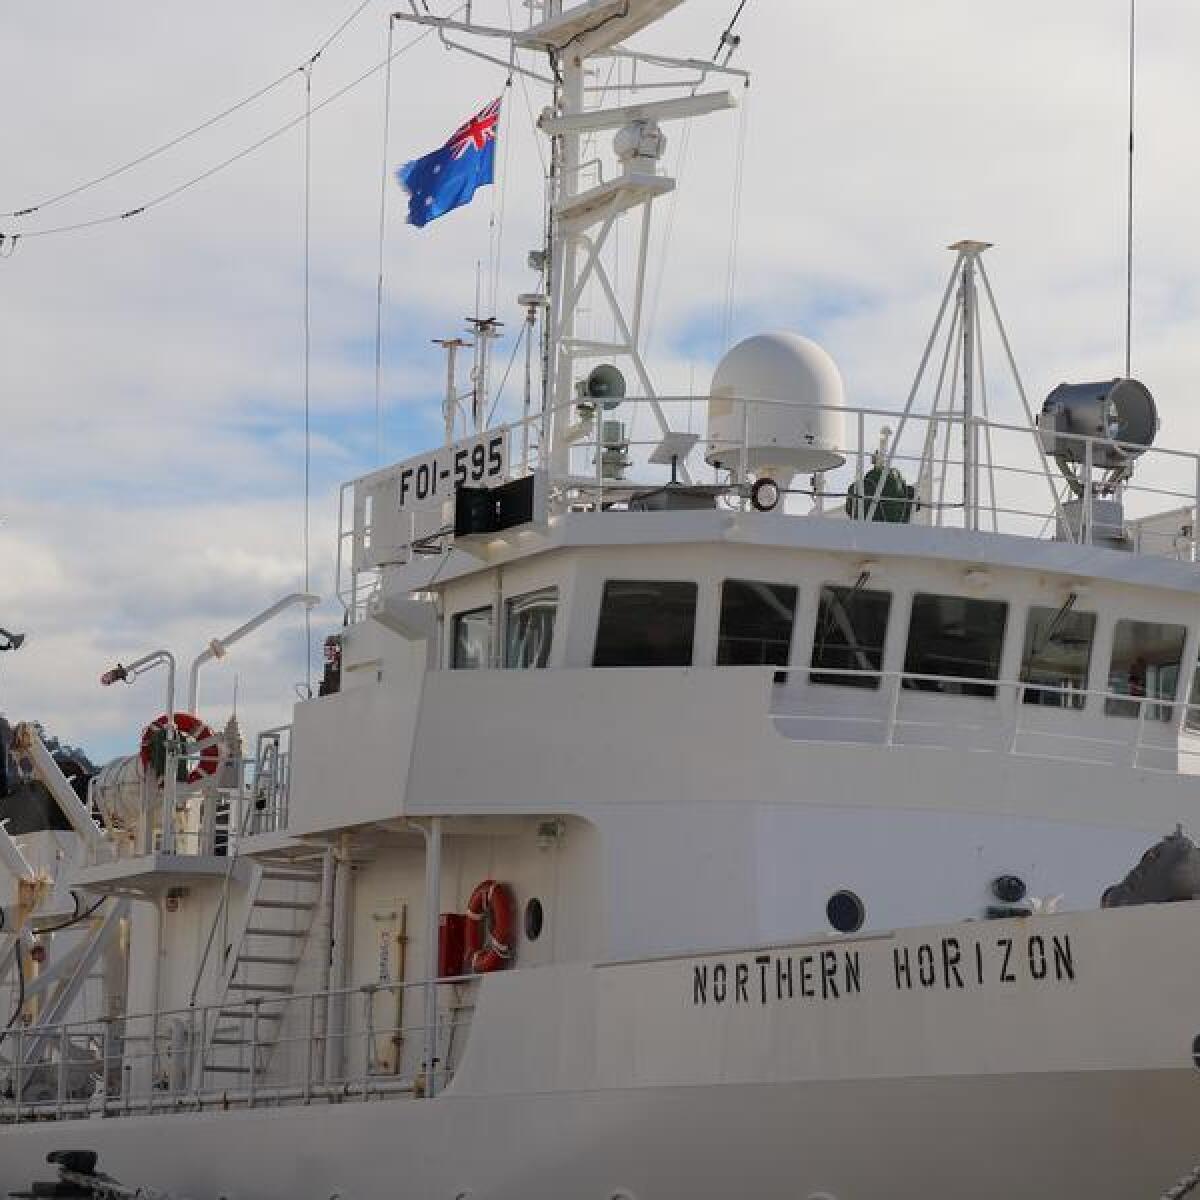 The Bandero docked in Hobart